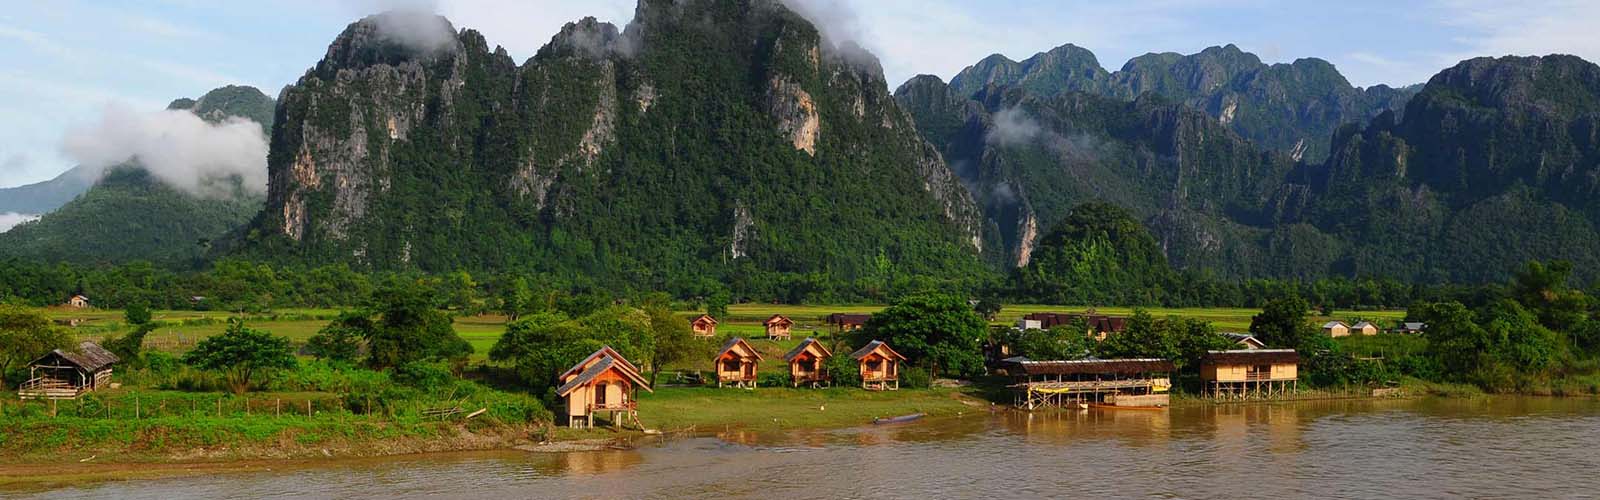 Voyage Laos, Voyage sur mesure au Laos, Voyage au laos